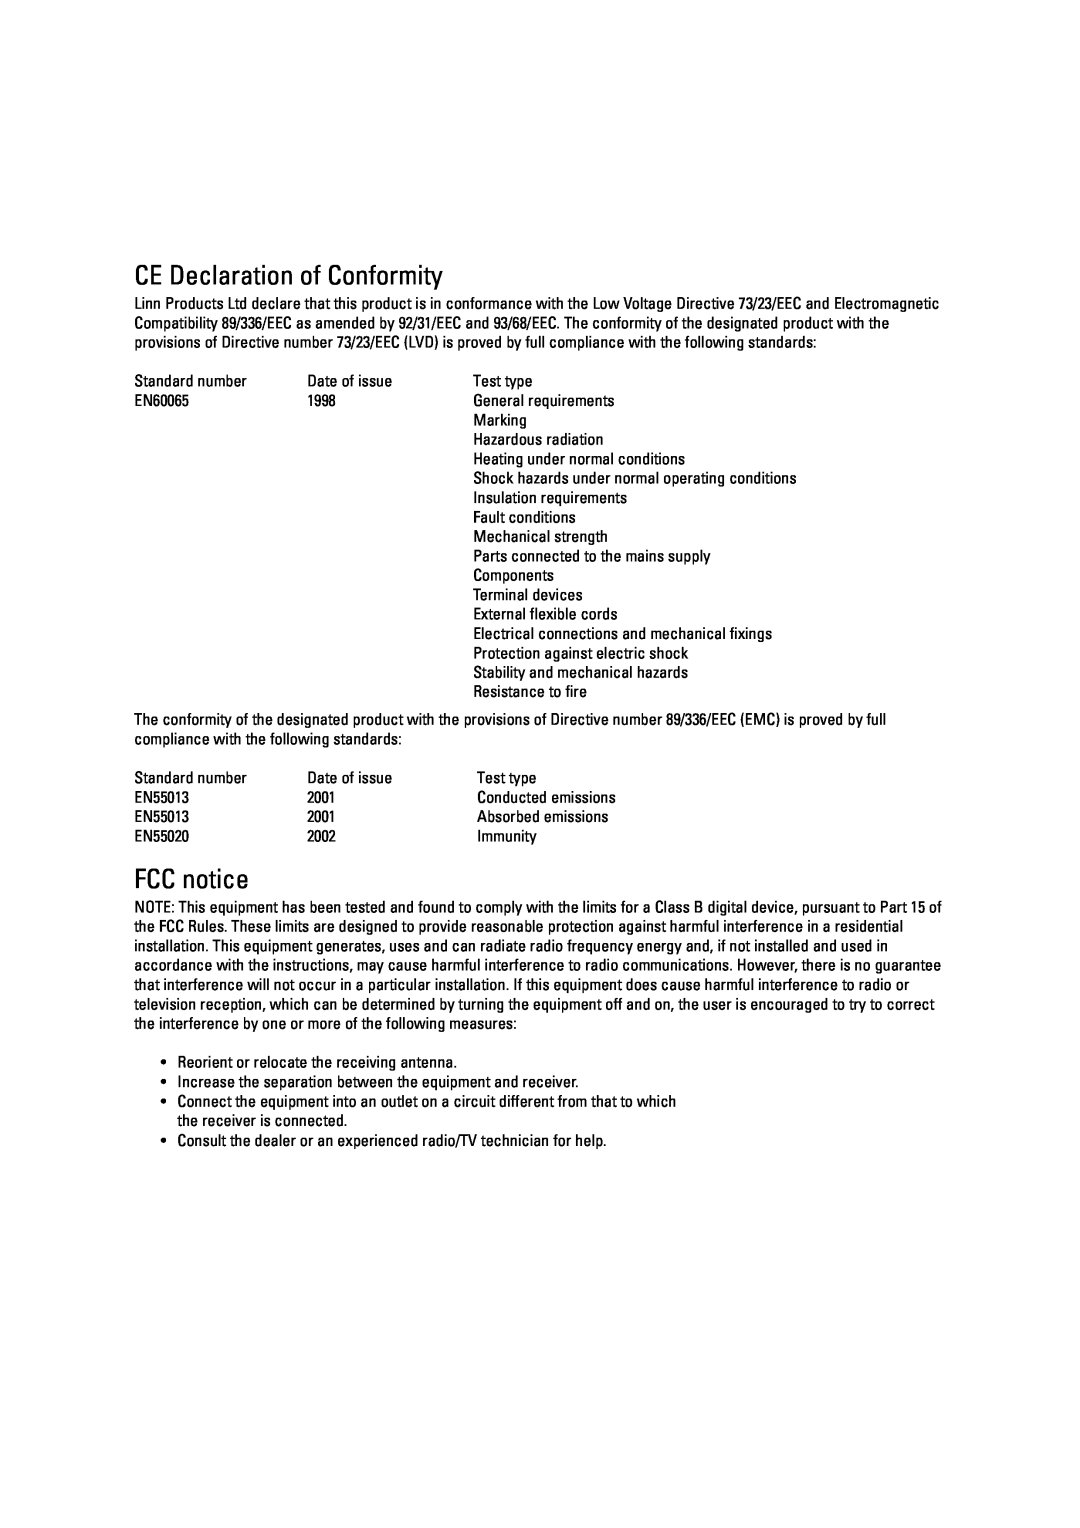 Linn WAKONDA owner manual CE Declaration of Conformity, FCC notice 